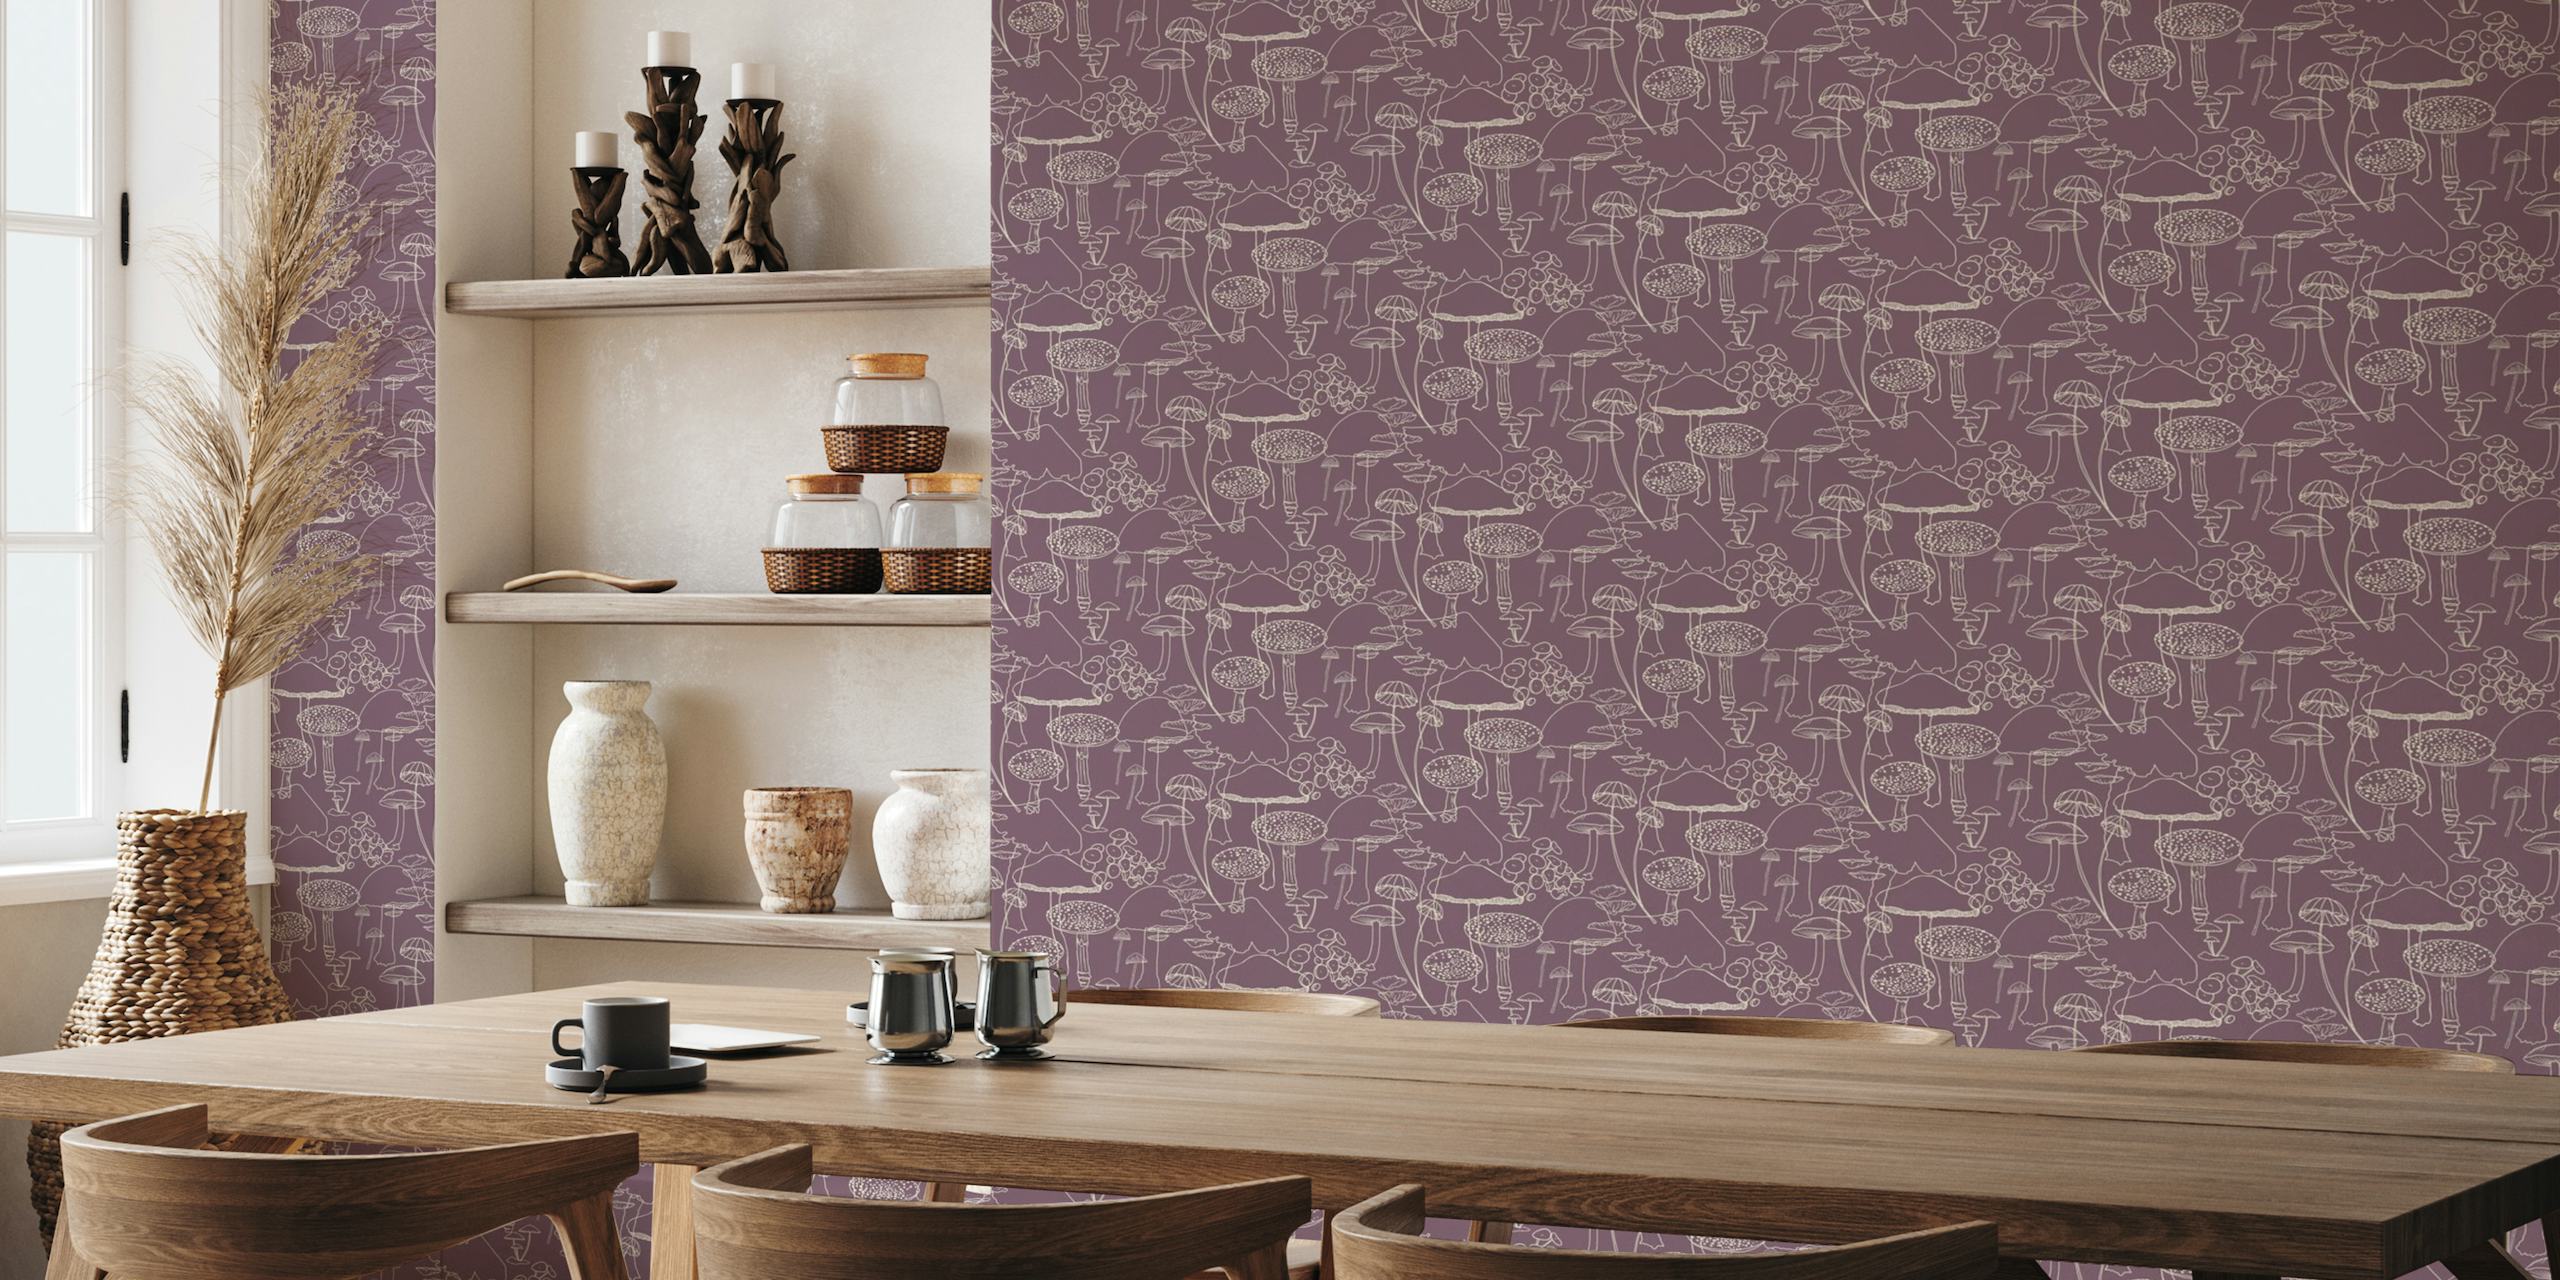 Sketchy Mushrooms on Purple - Small wallpaper